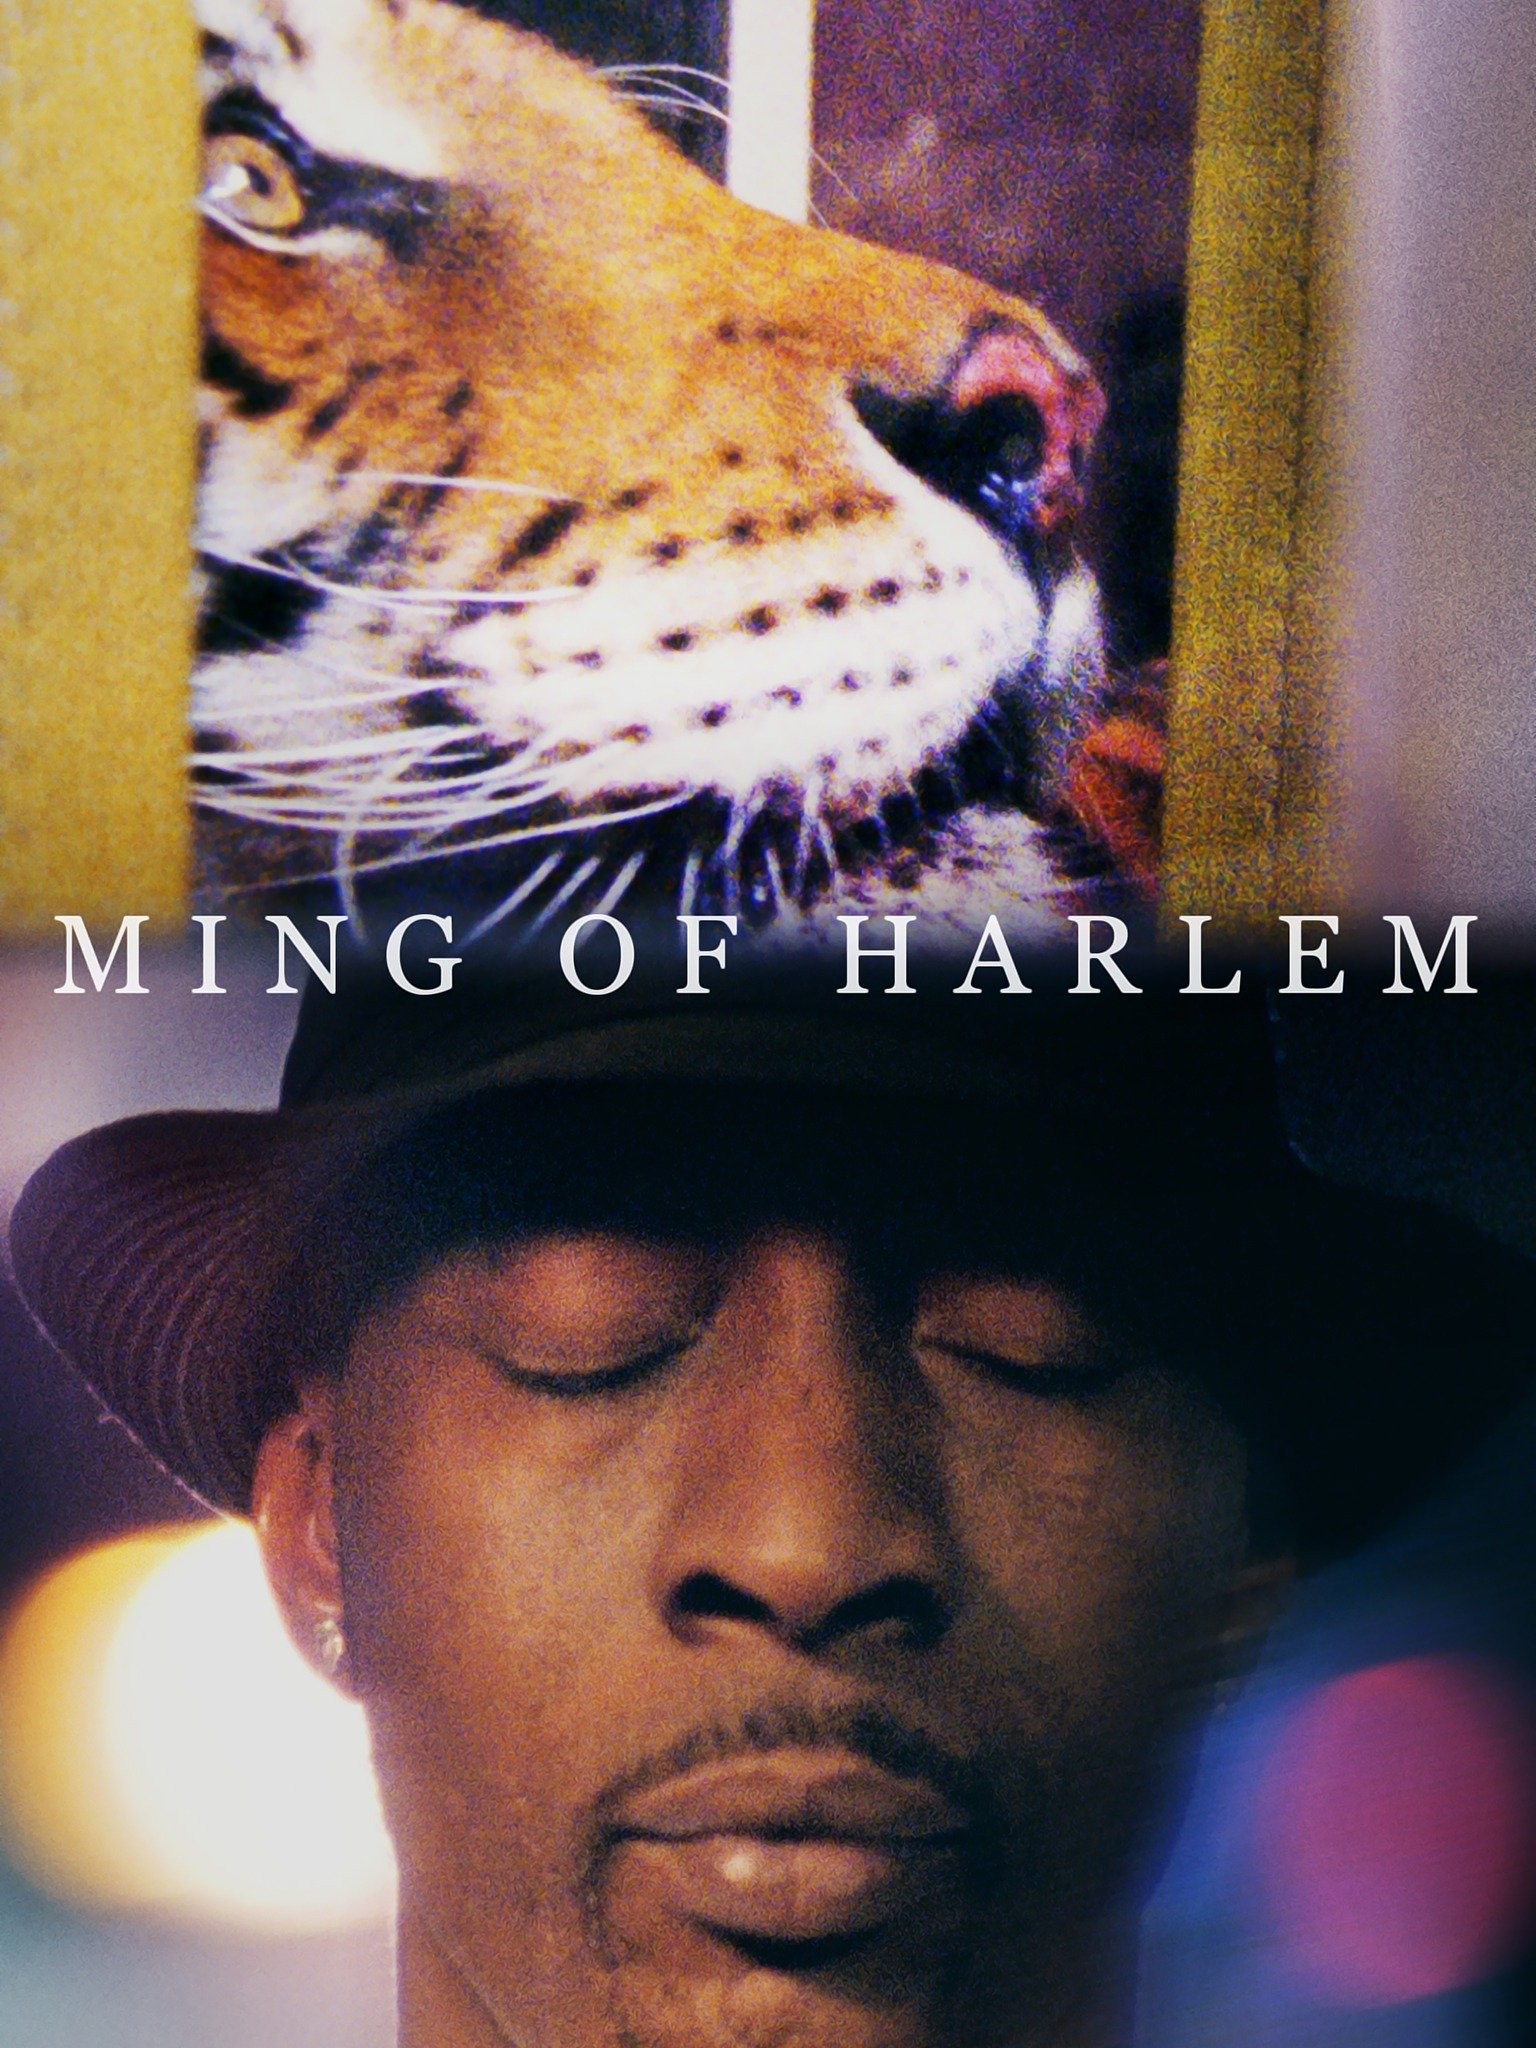 Ming of Harlem - Wikipedia